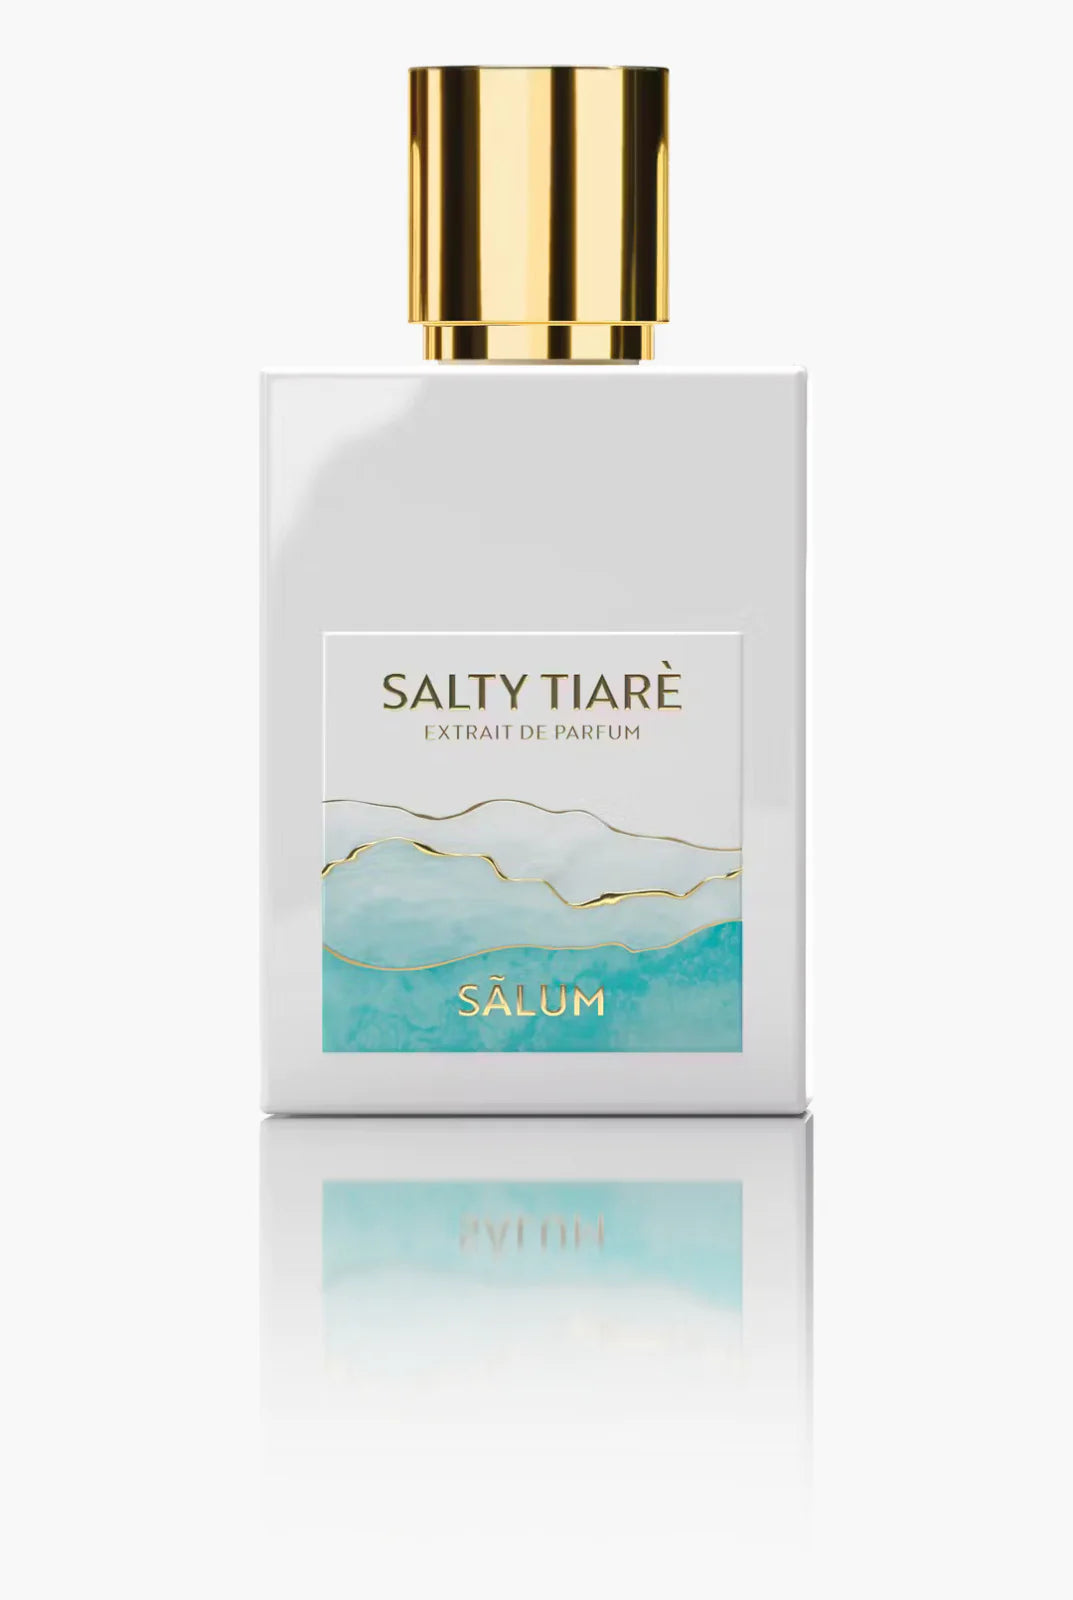 SALUM - SALTY TIARE EXTRAIT DE PARFUM 50 ML